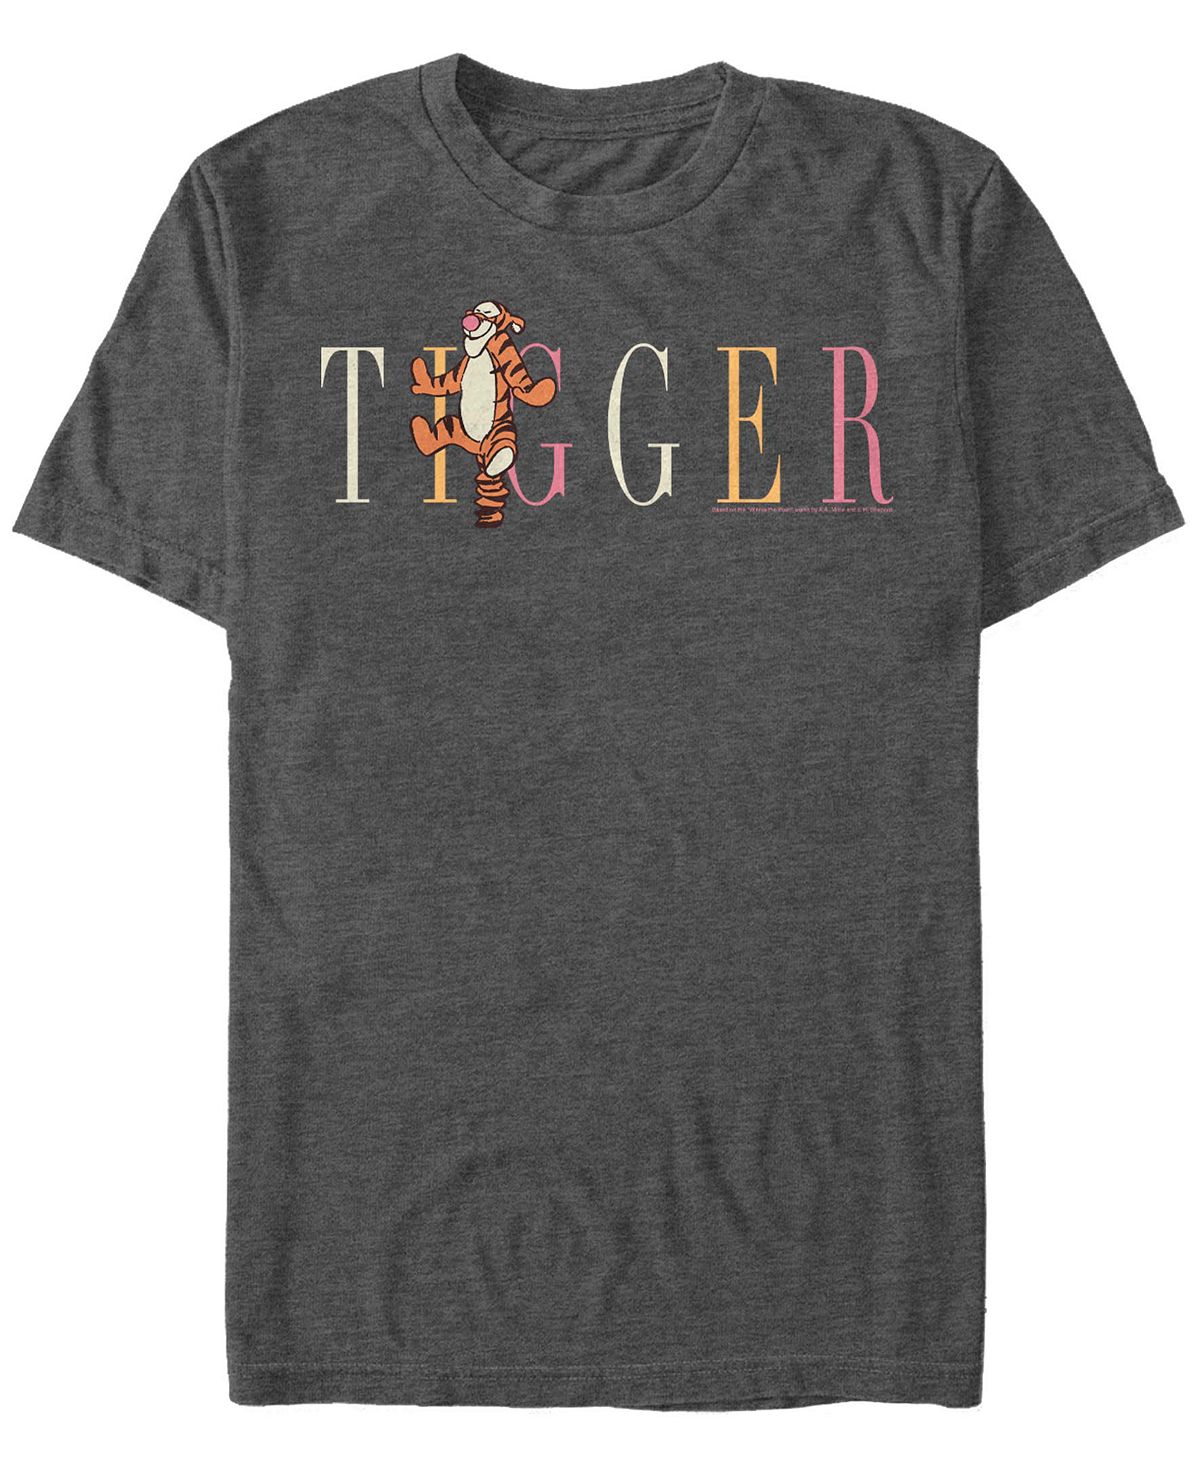 Мужская футболка с коротким рукавом tigger fashion Fifth Sun, темно-серый